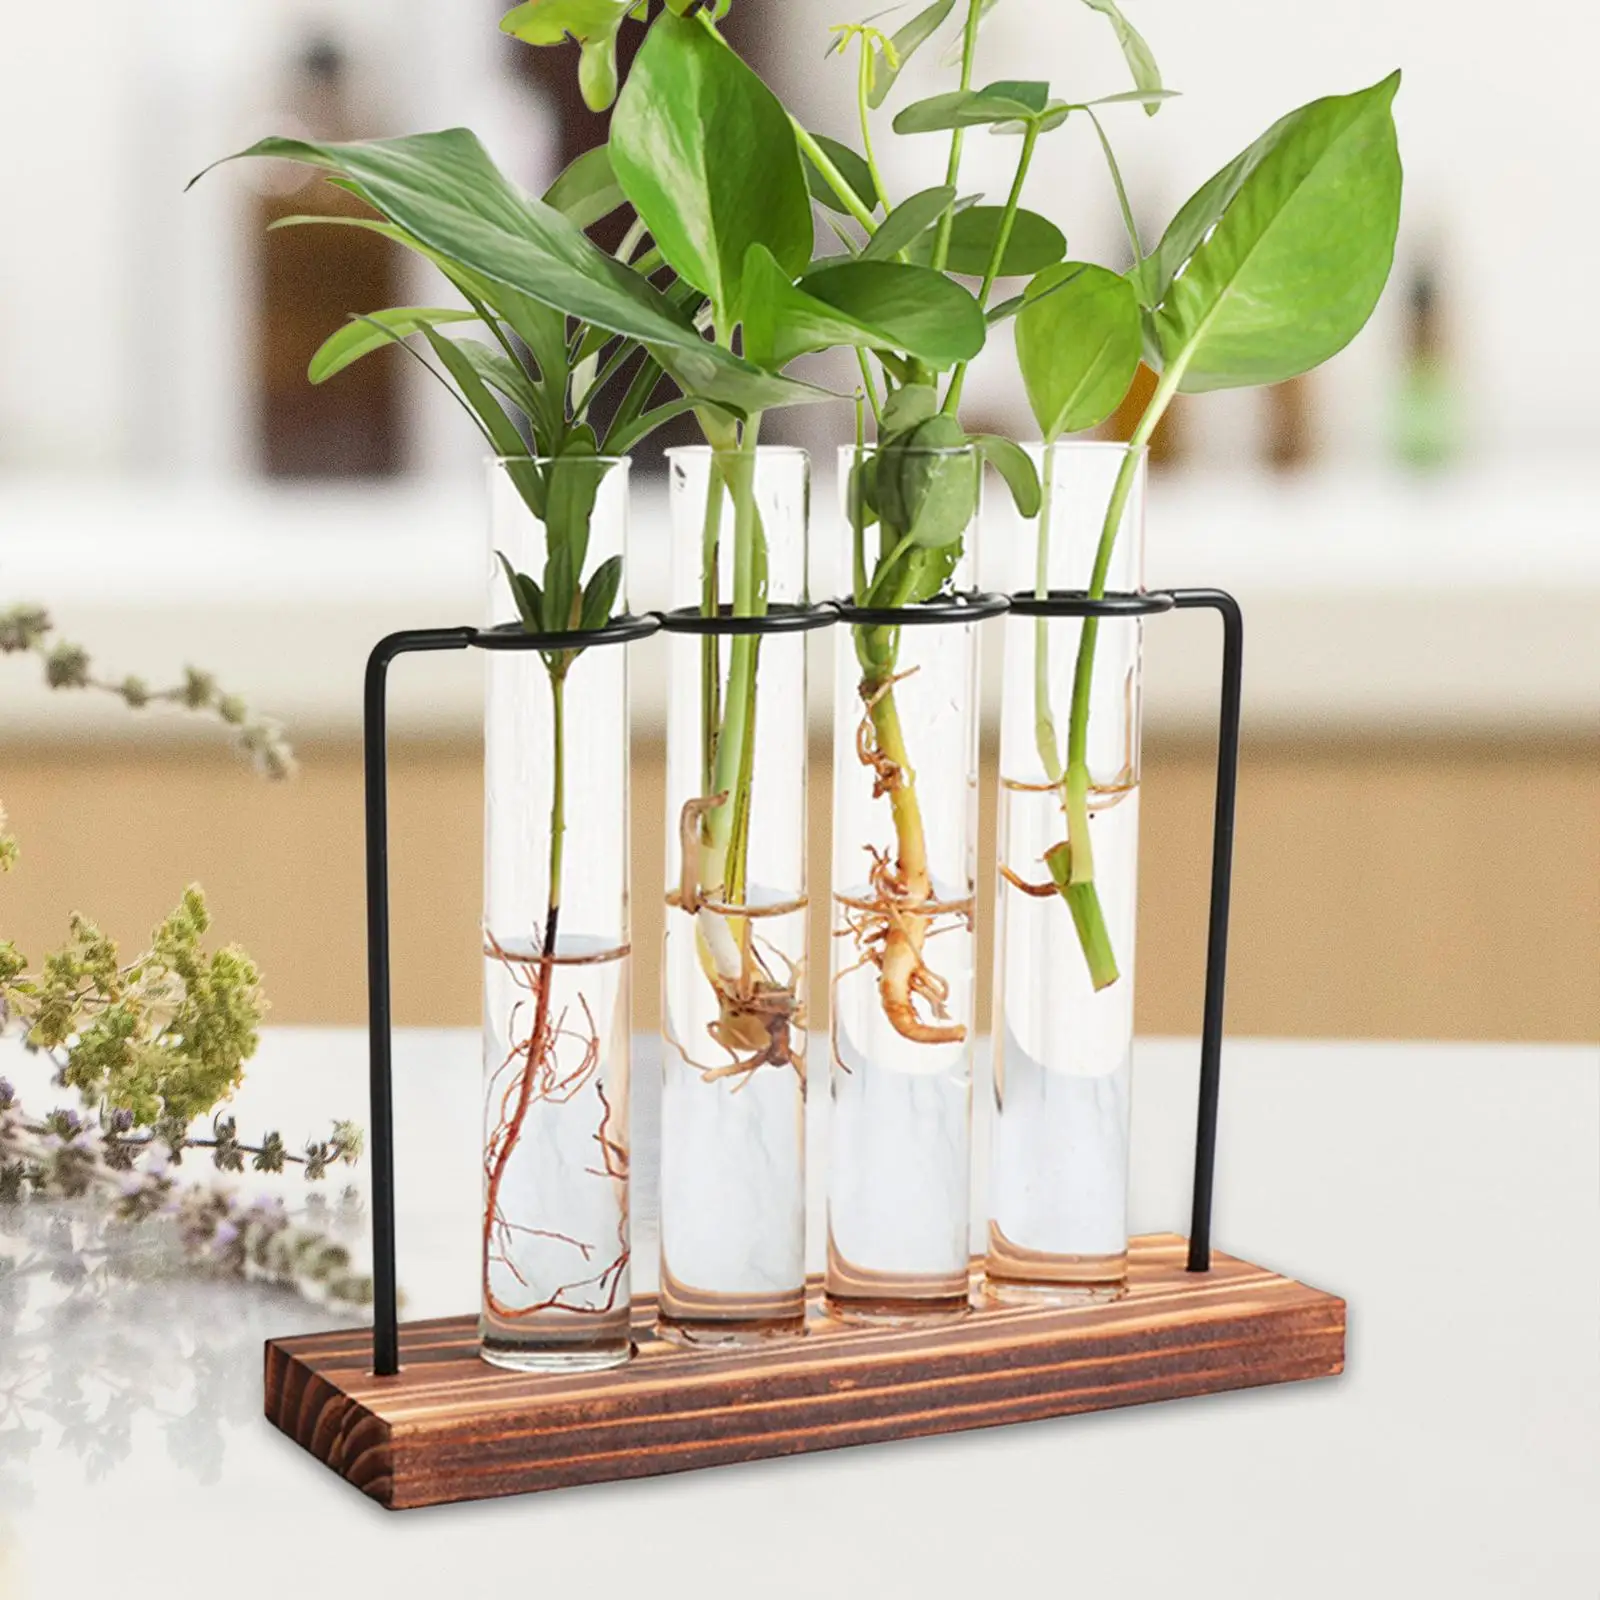 Test Tube Vase for Flowers with Stand Wooden Base Creative Decorative Flower Arrangement for Tabletop Indoor Bedroom Shelf Gifts